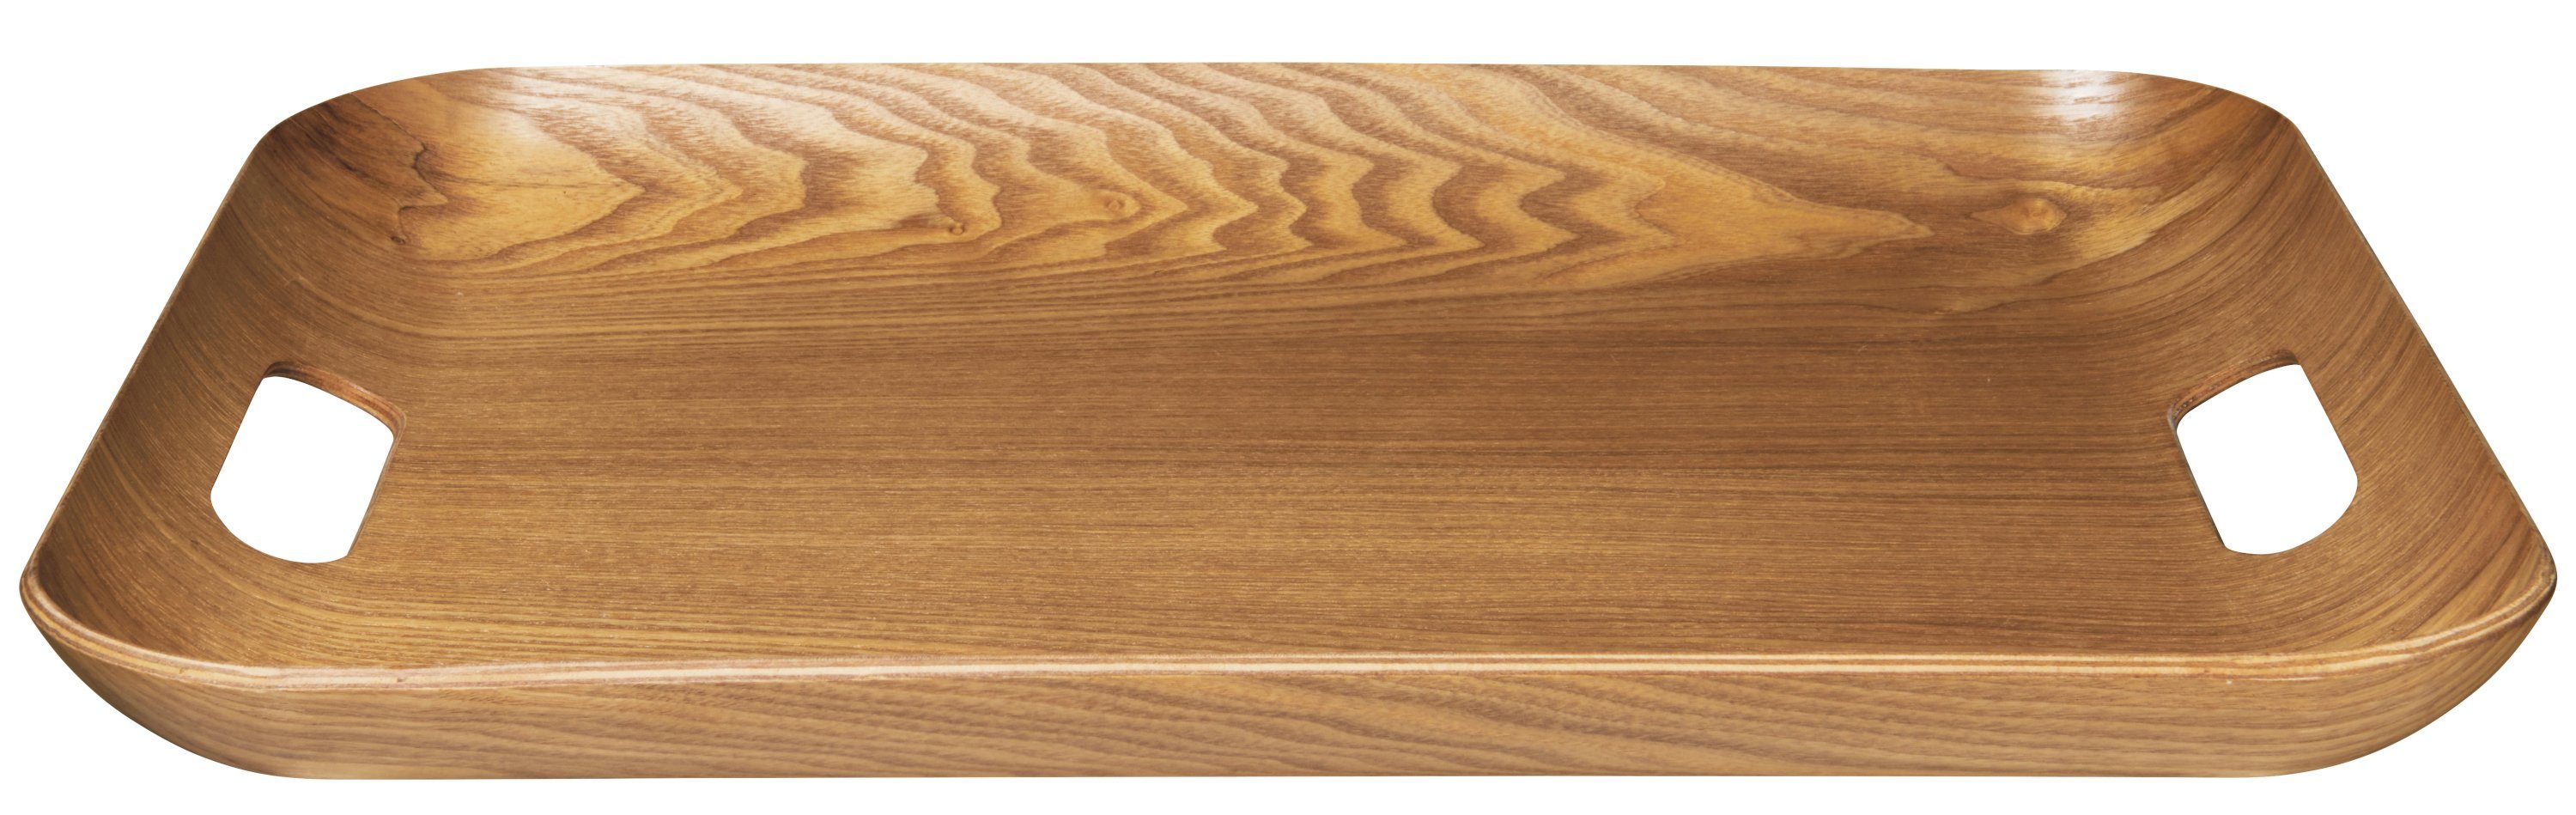 Tablett Weidenholz cm, Rechteckig SELECTION 45 ASA x wood 36